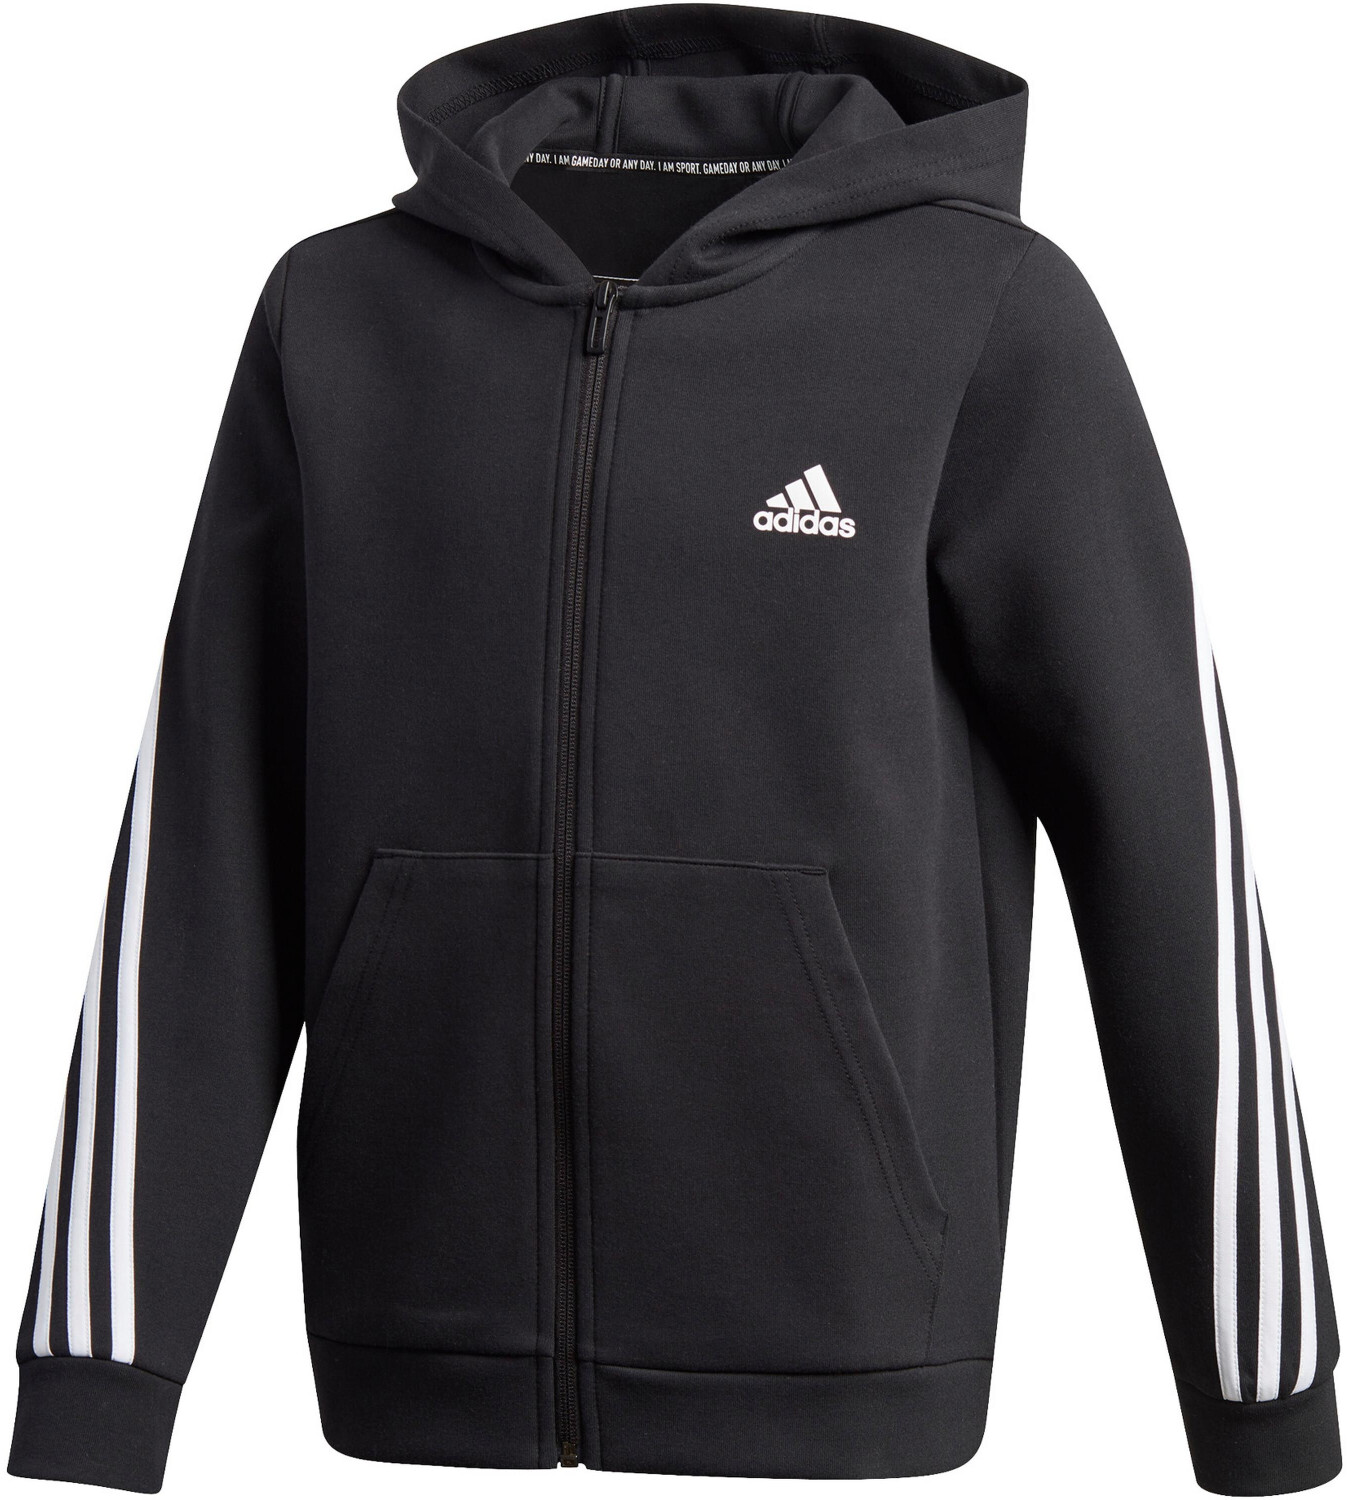 Adidas Boys Training 3-Stripes Doubleknit Full-Zip Hoodie black/white